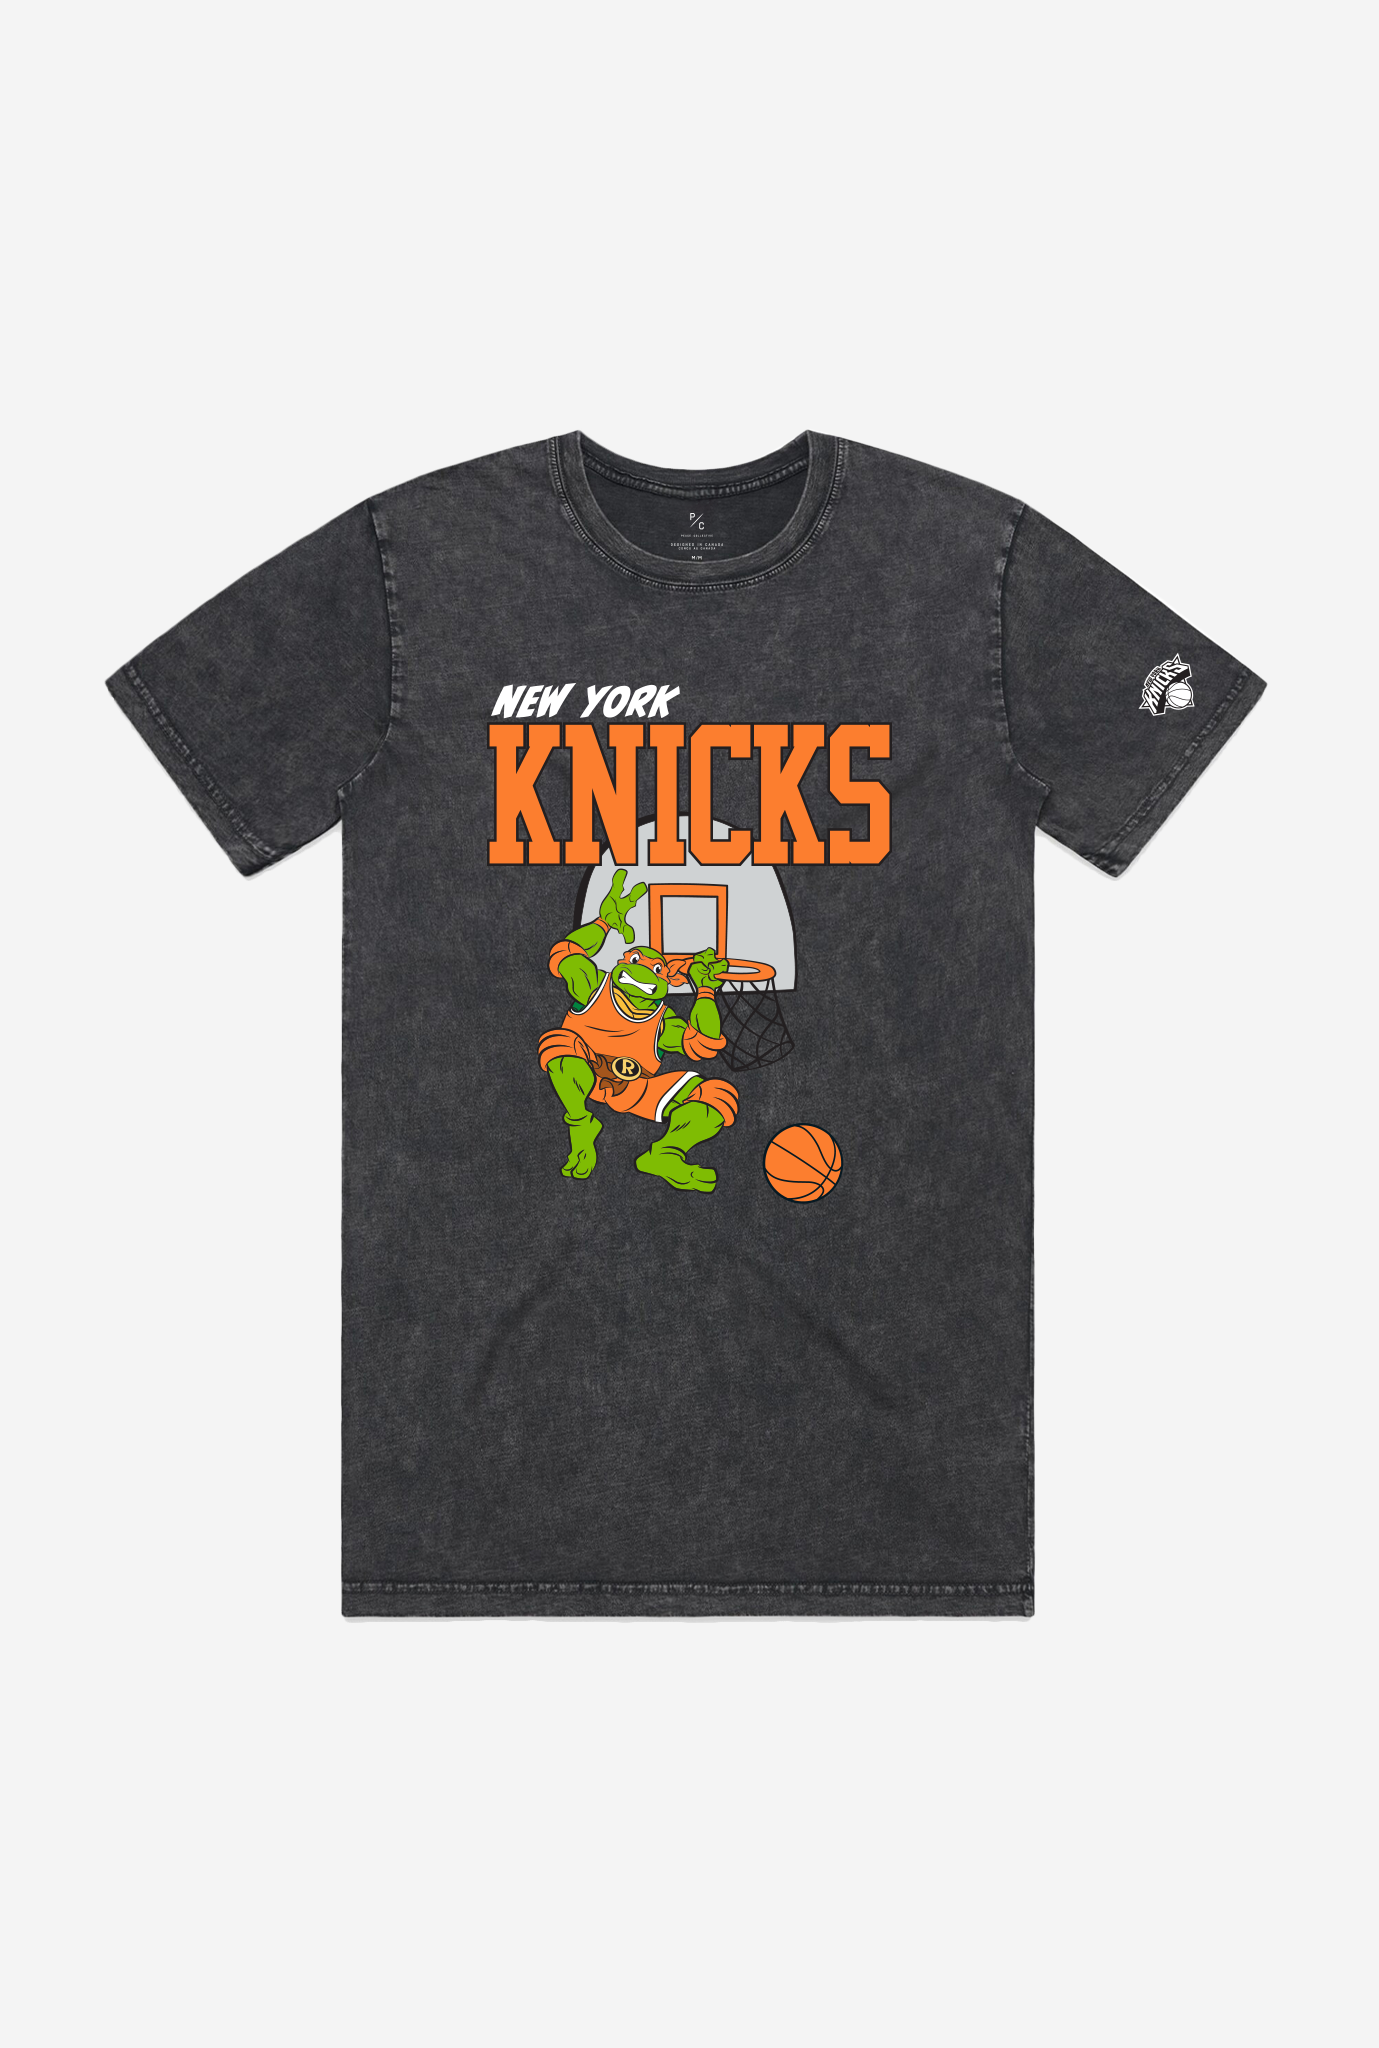 P/C x TMNT New York Knicks Stonewash T-Shirt - Black